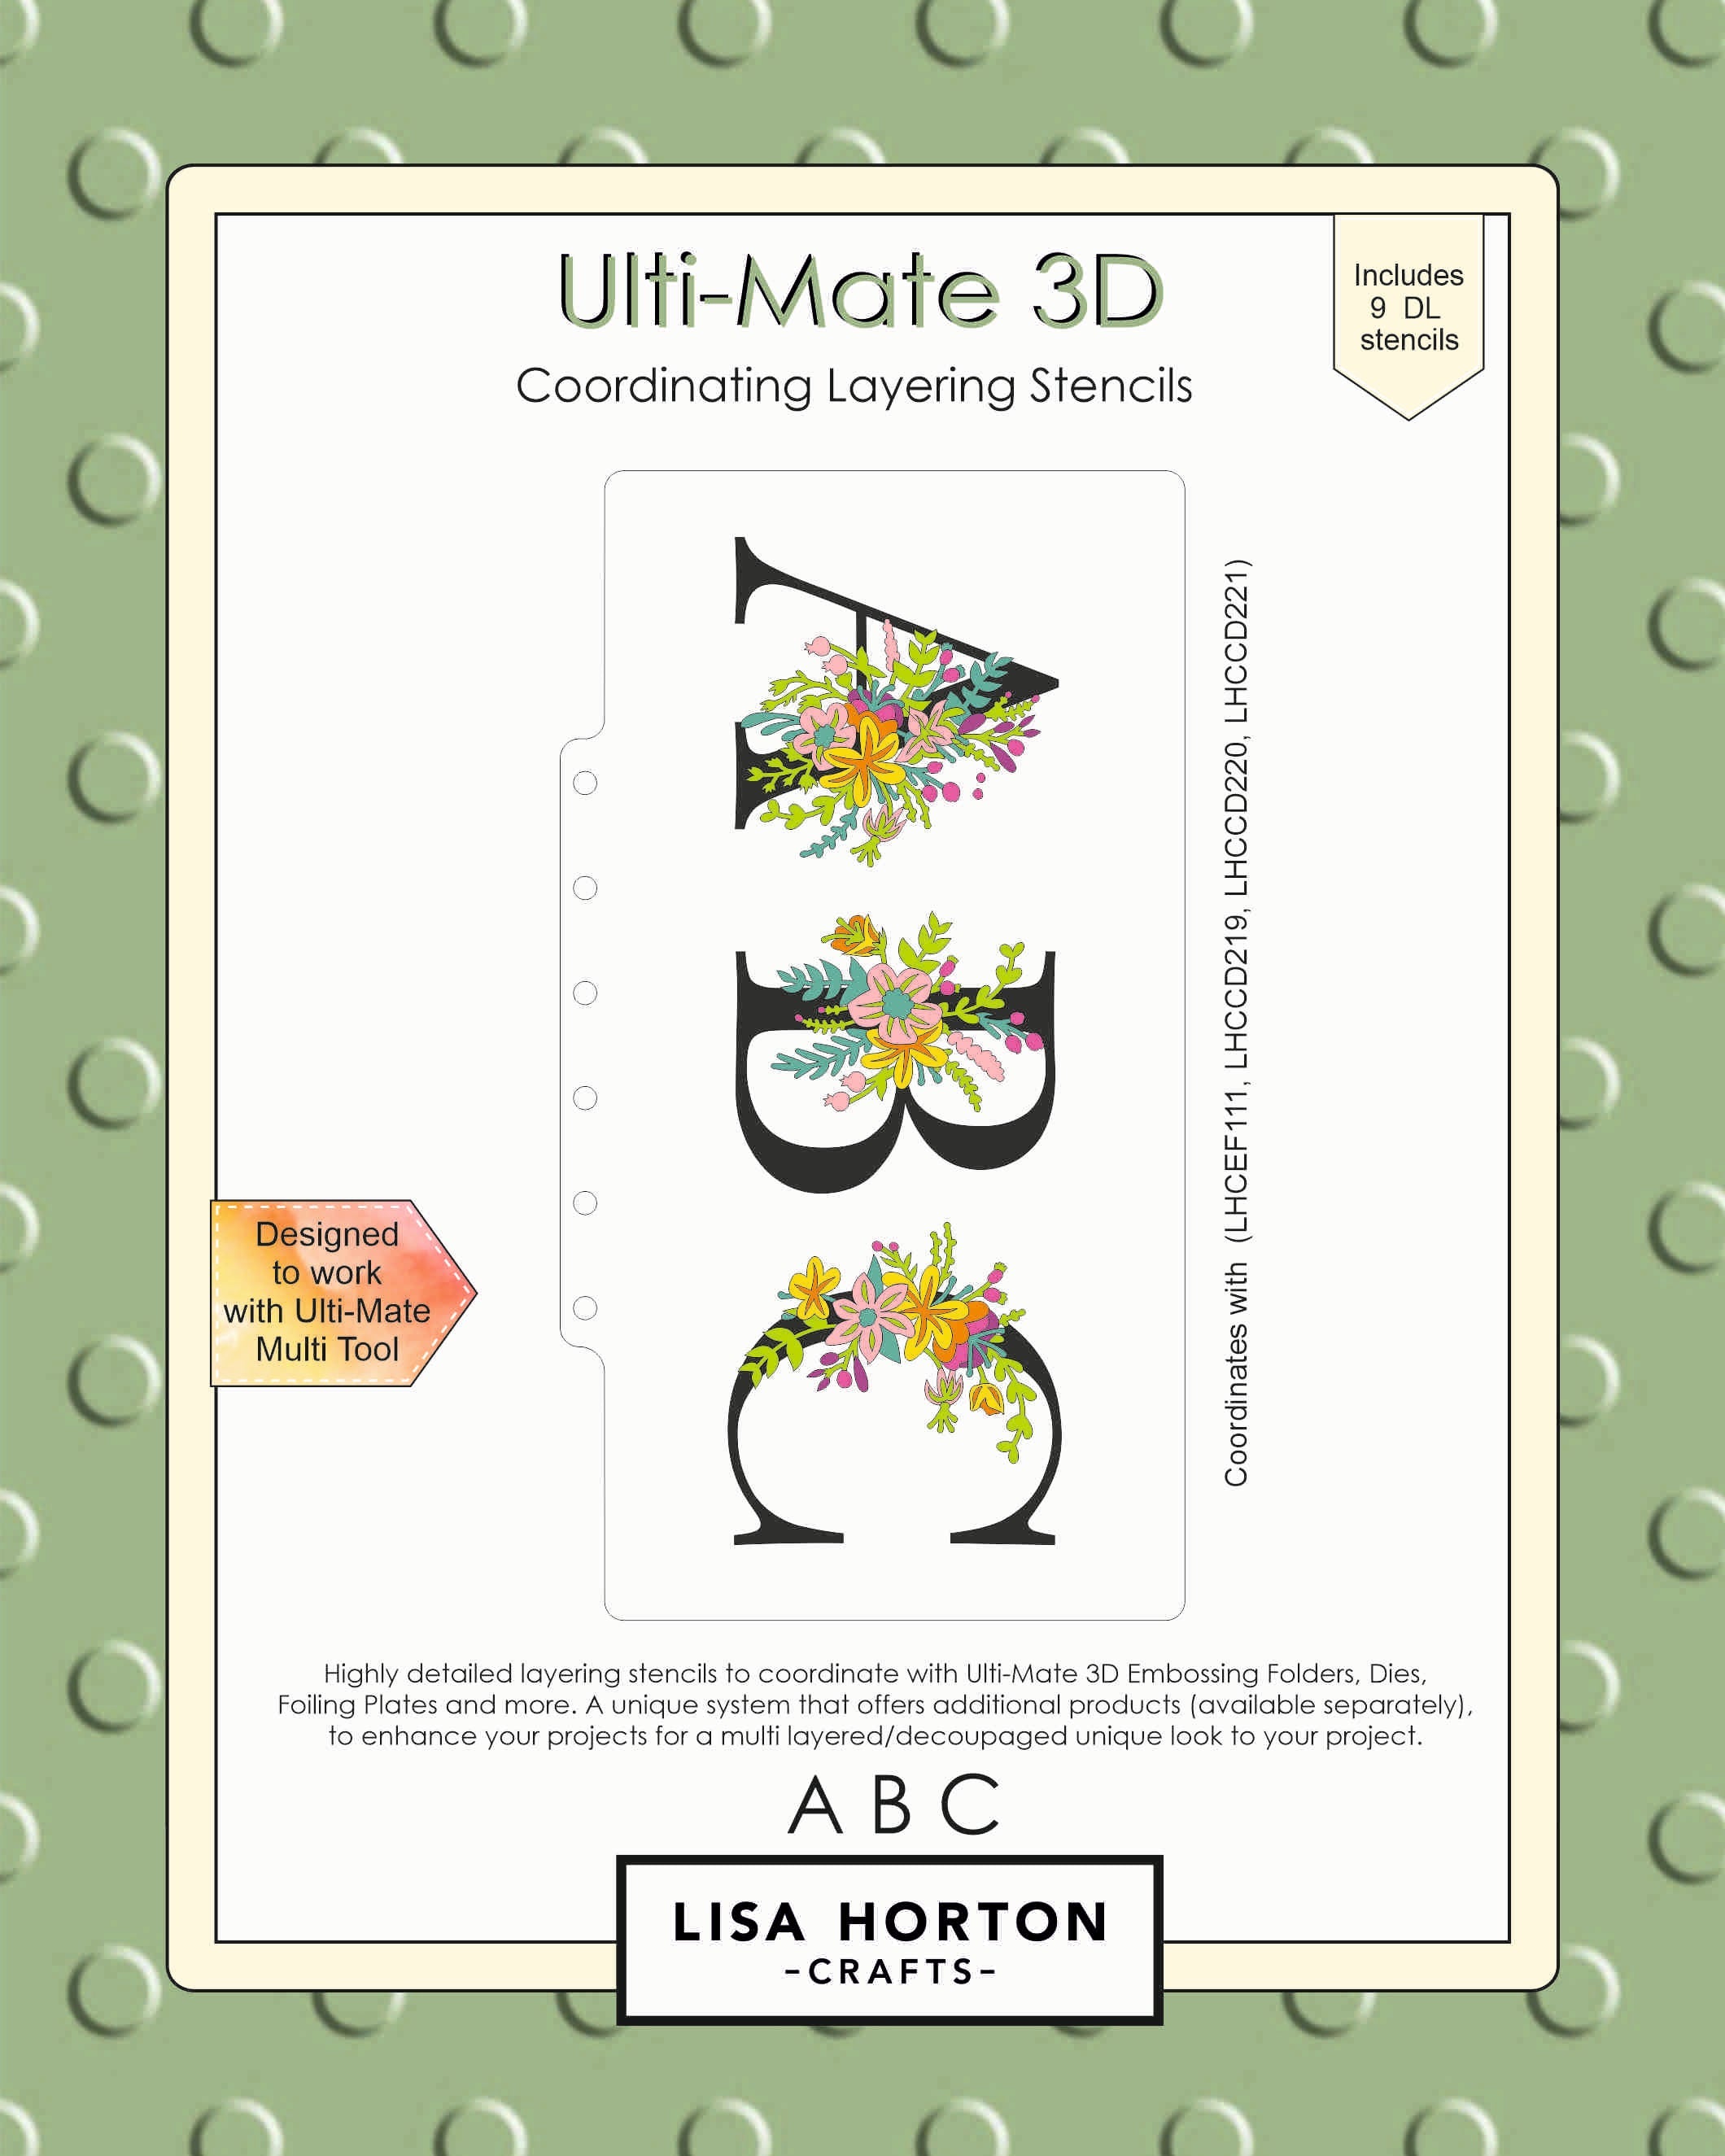 Lisa Horton Crafts Ulti-Mate 3D Slimline Layering Stencils ABC